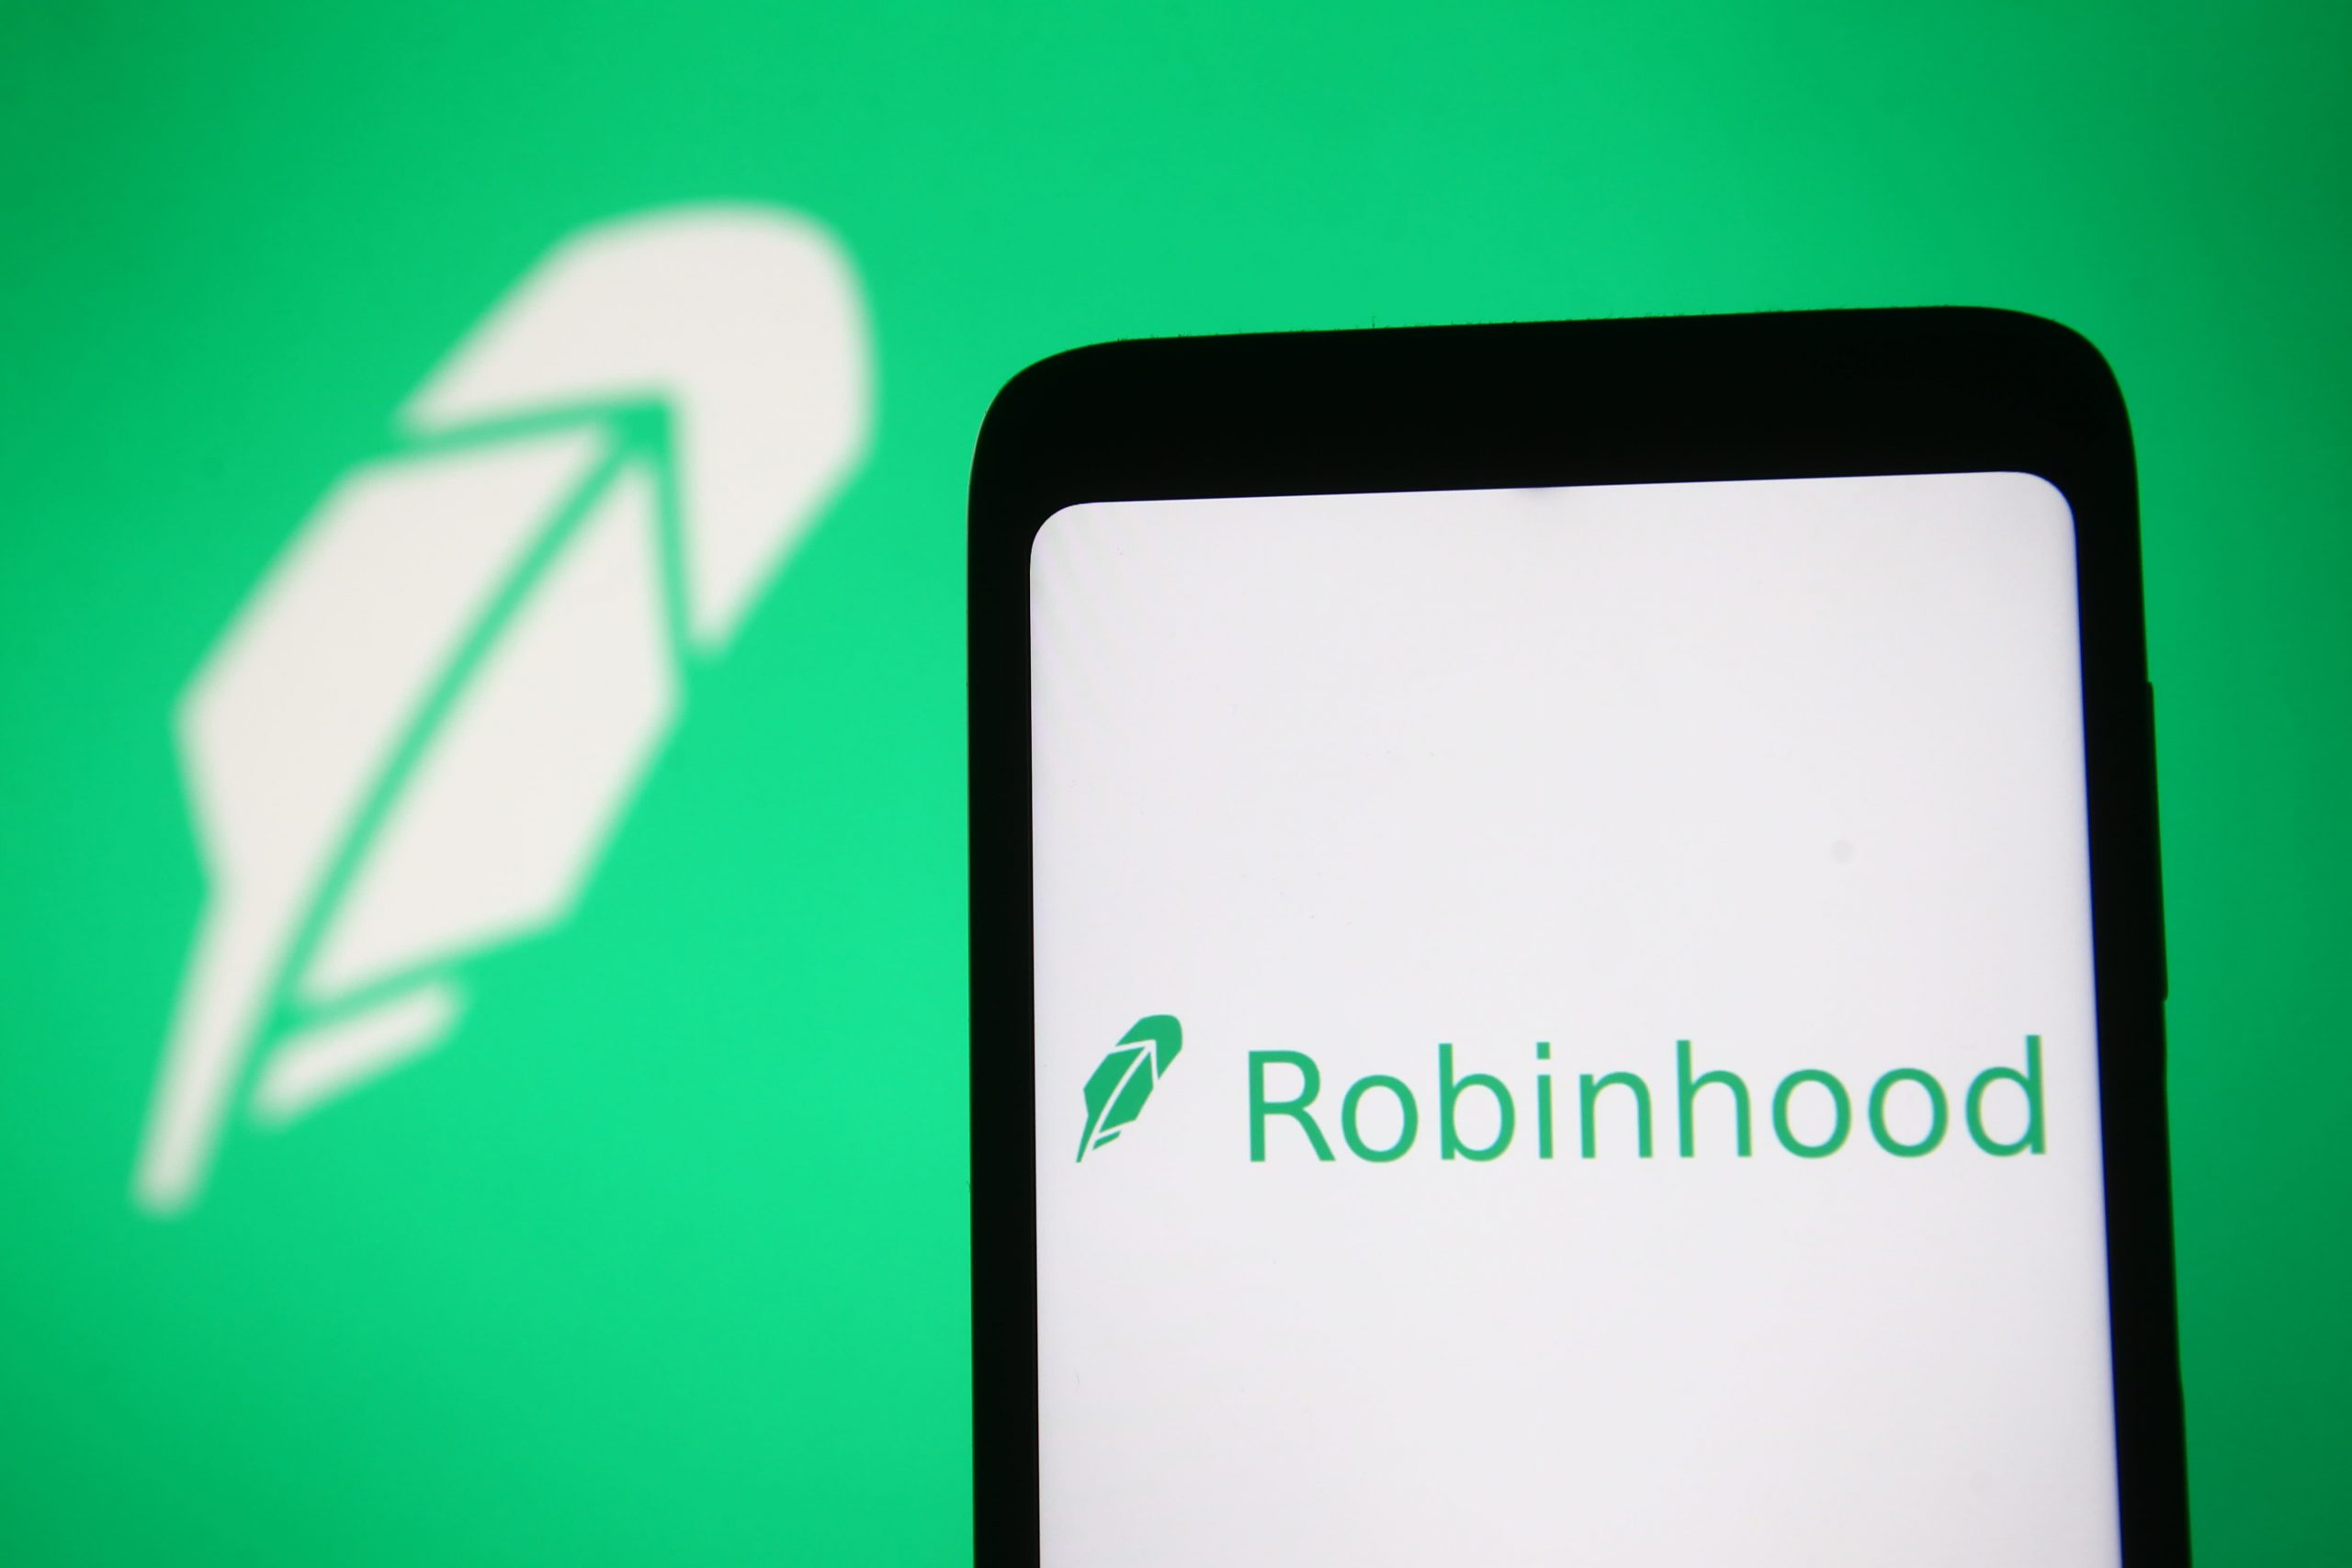 Robinhood affords blistering retort to ‘elitist’ criticisms from Munger